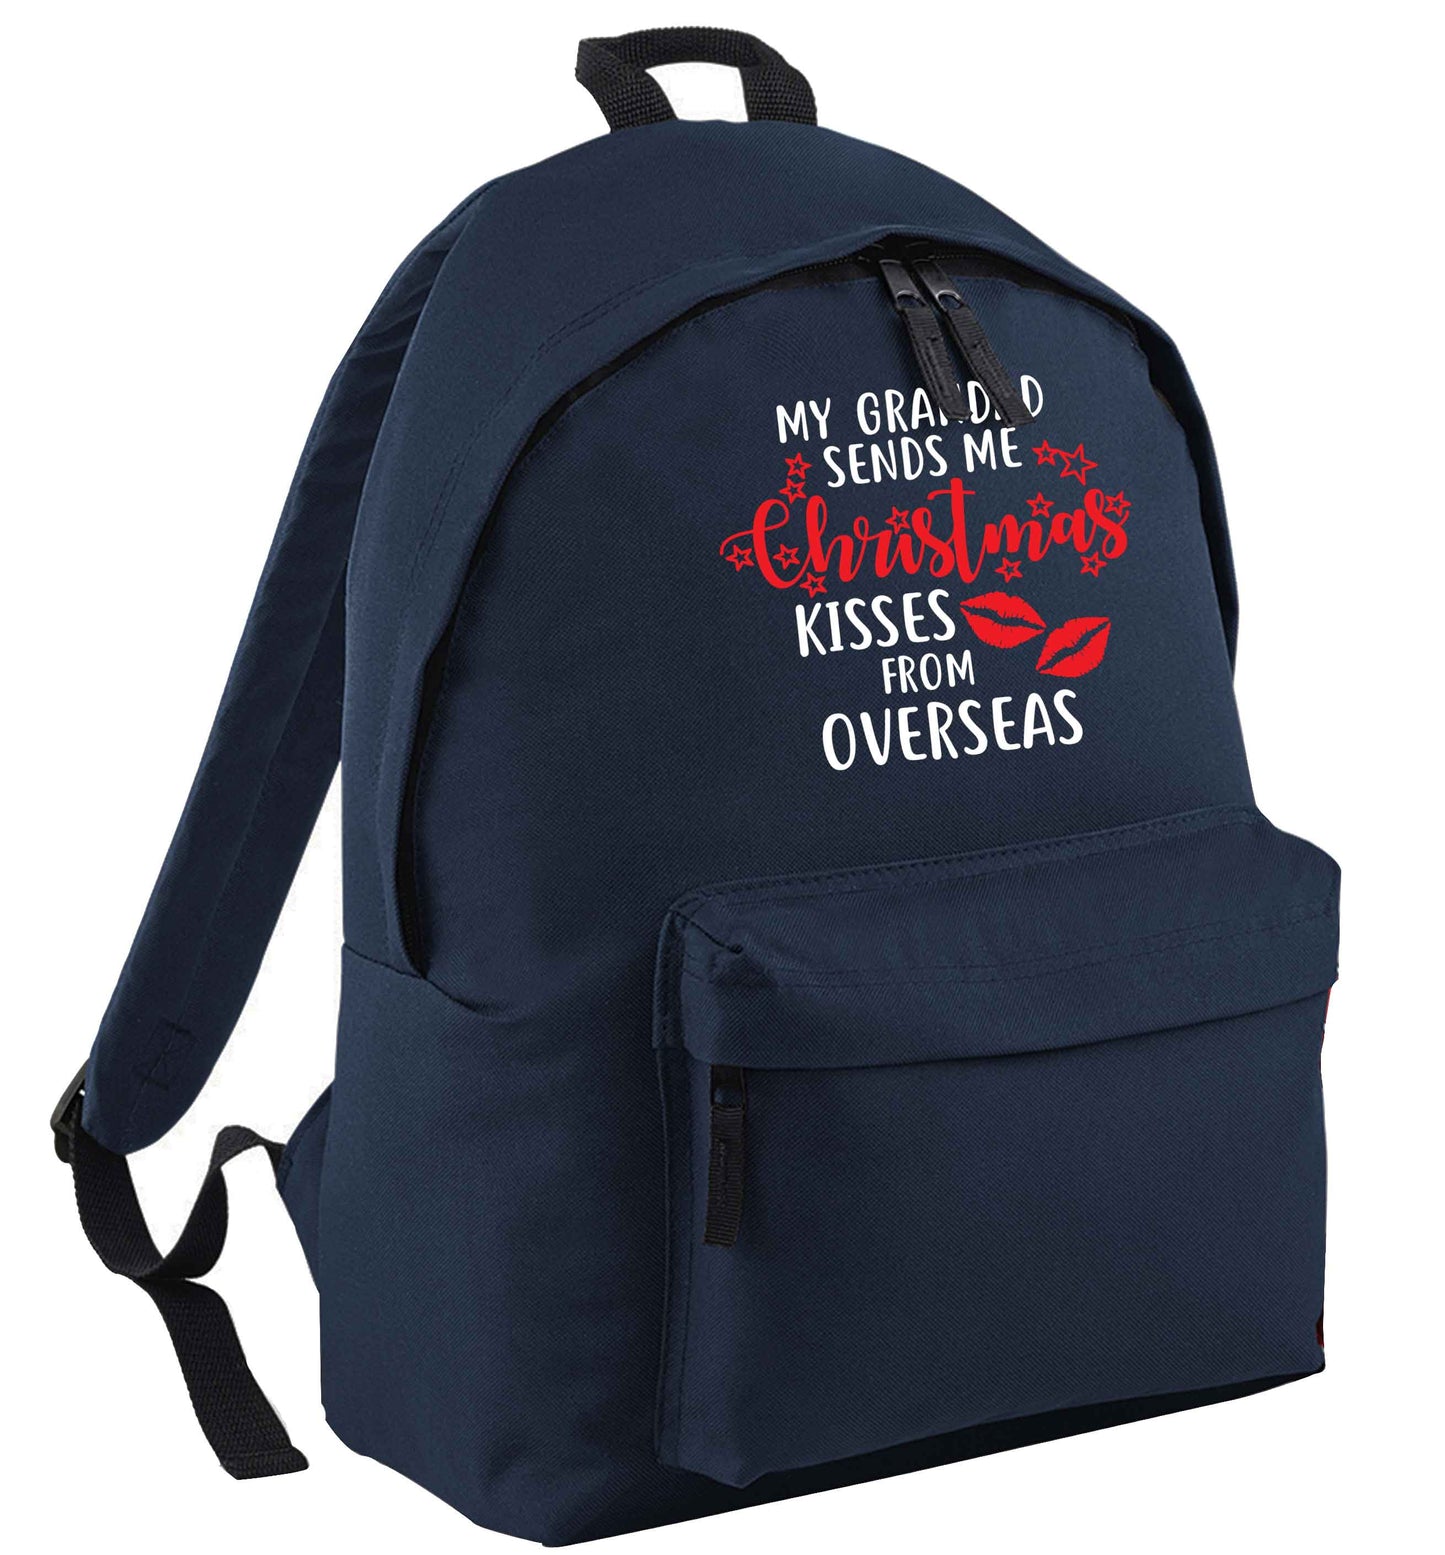 Grandad Christmas Kisses Overseas navy adults backpack